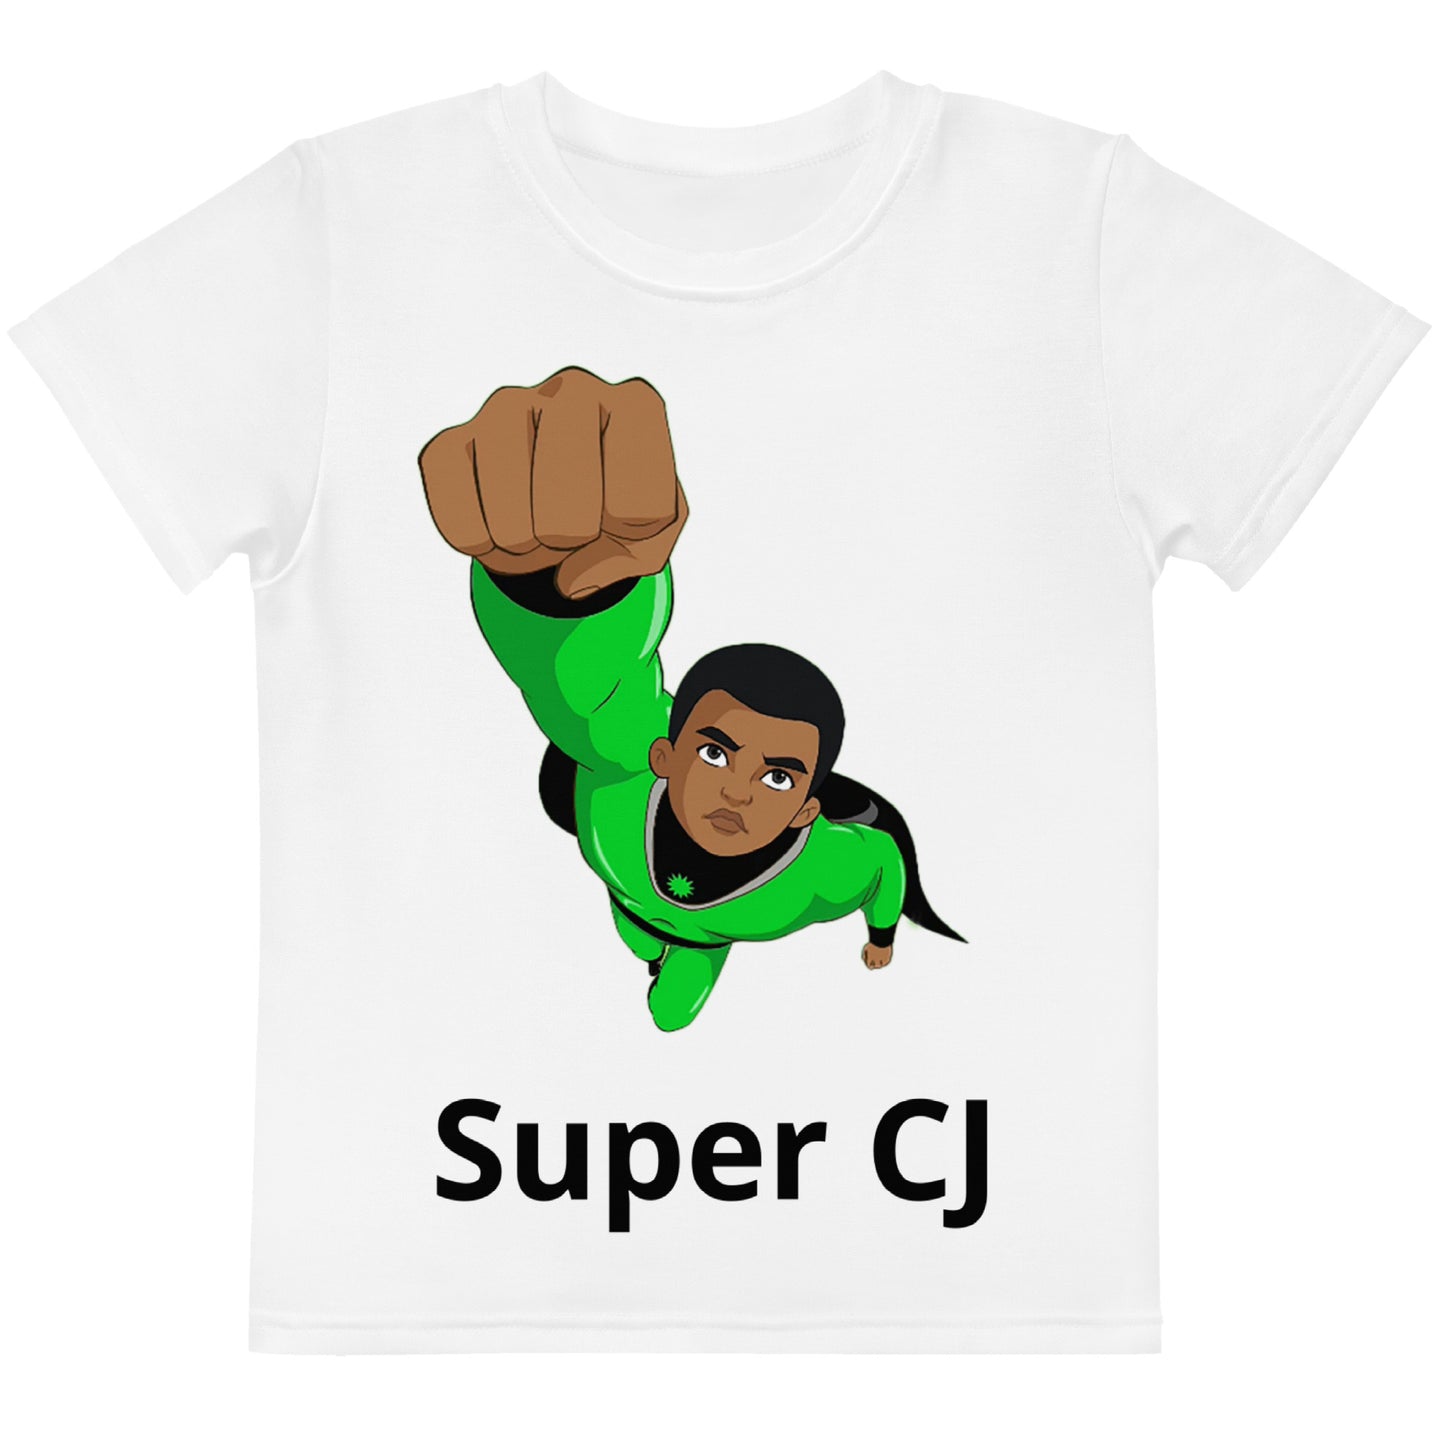 Super CJ Kids crew neck t-shirt